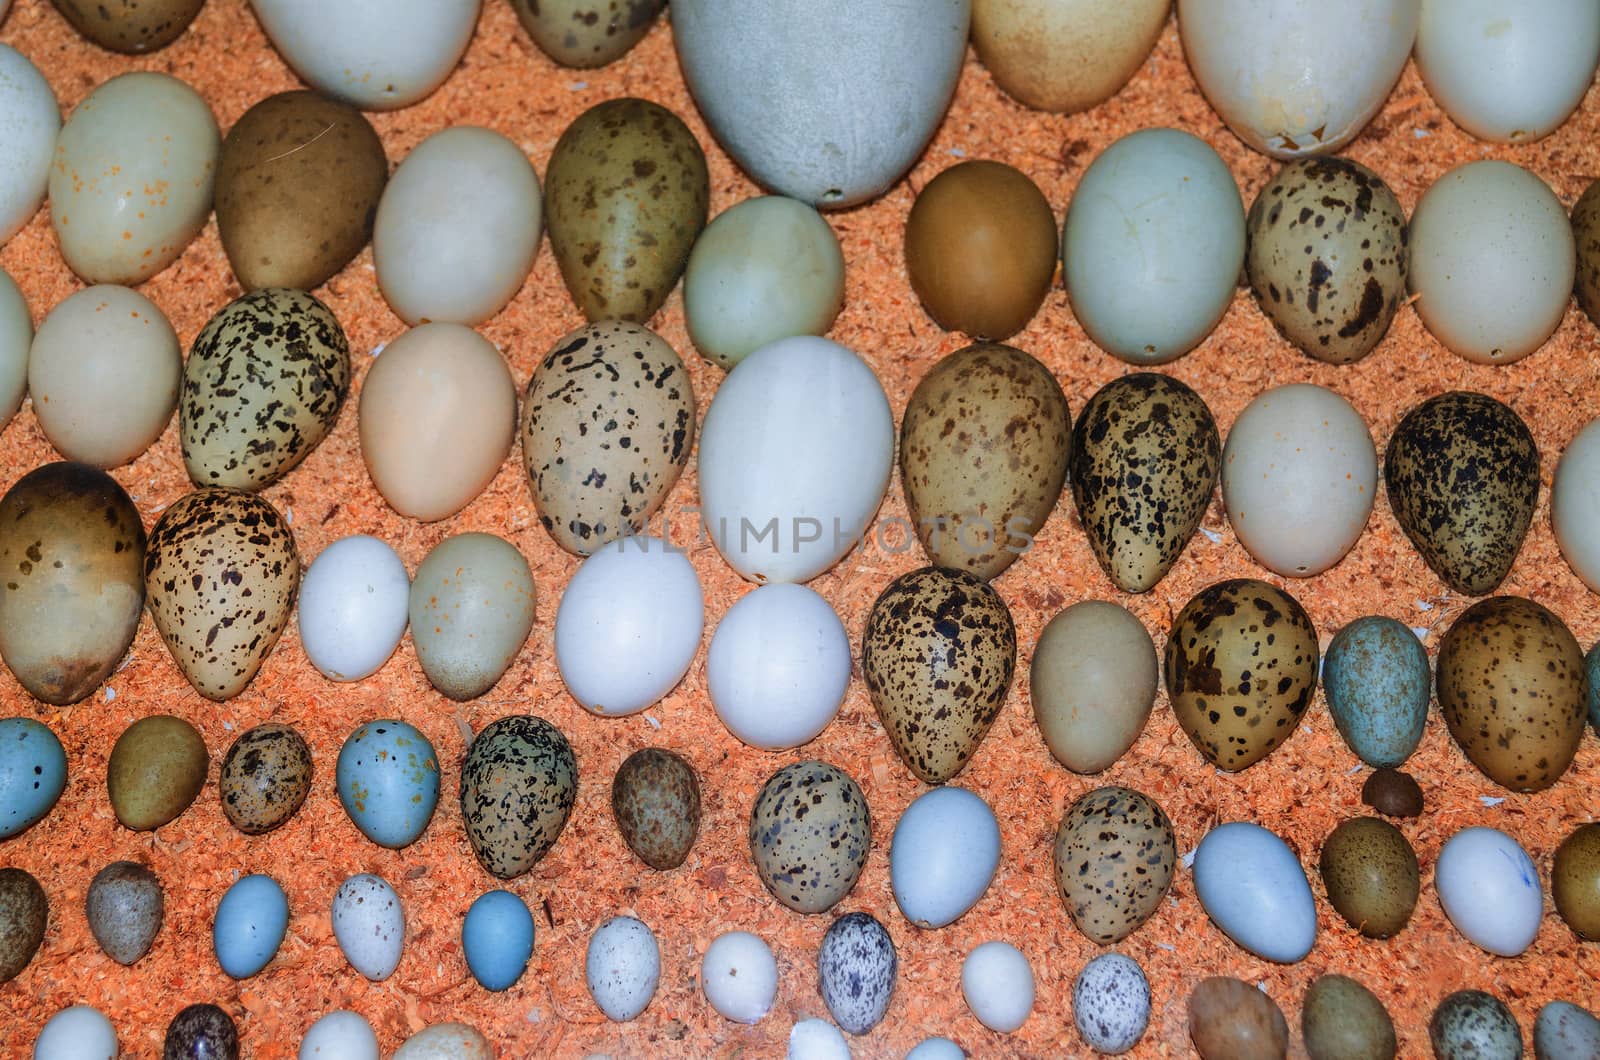 Collection of various birds' eggs of different bird species.